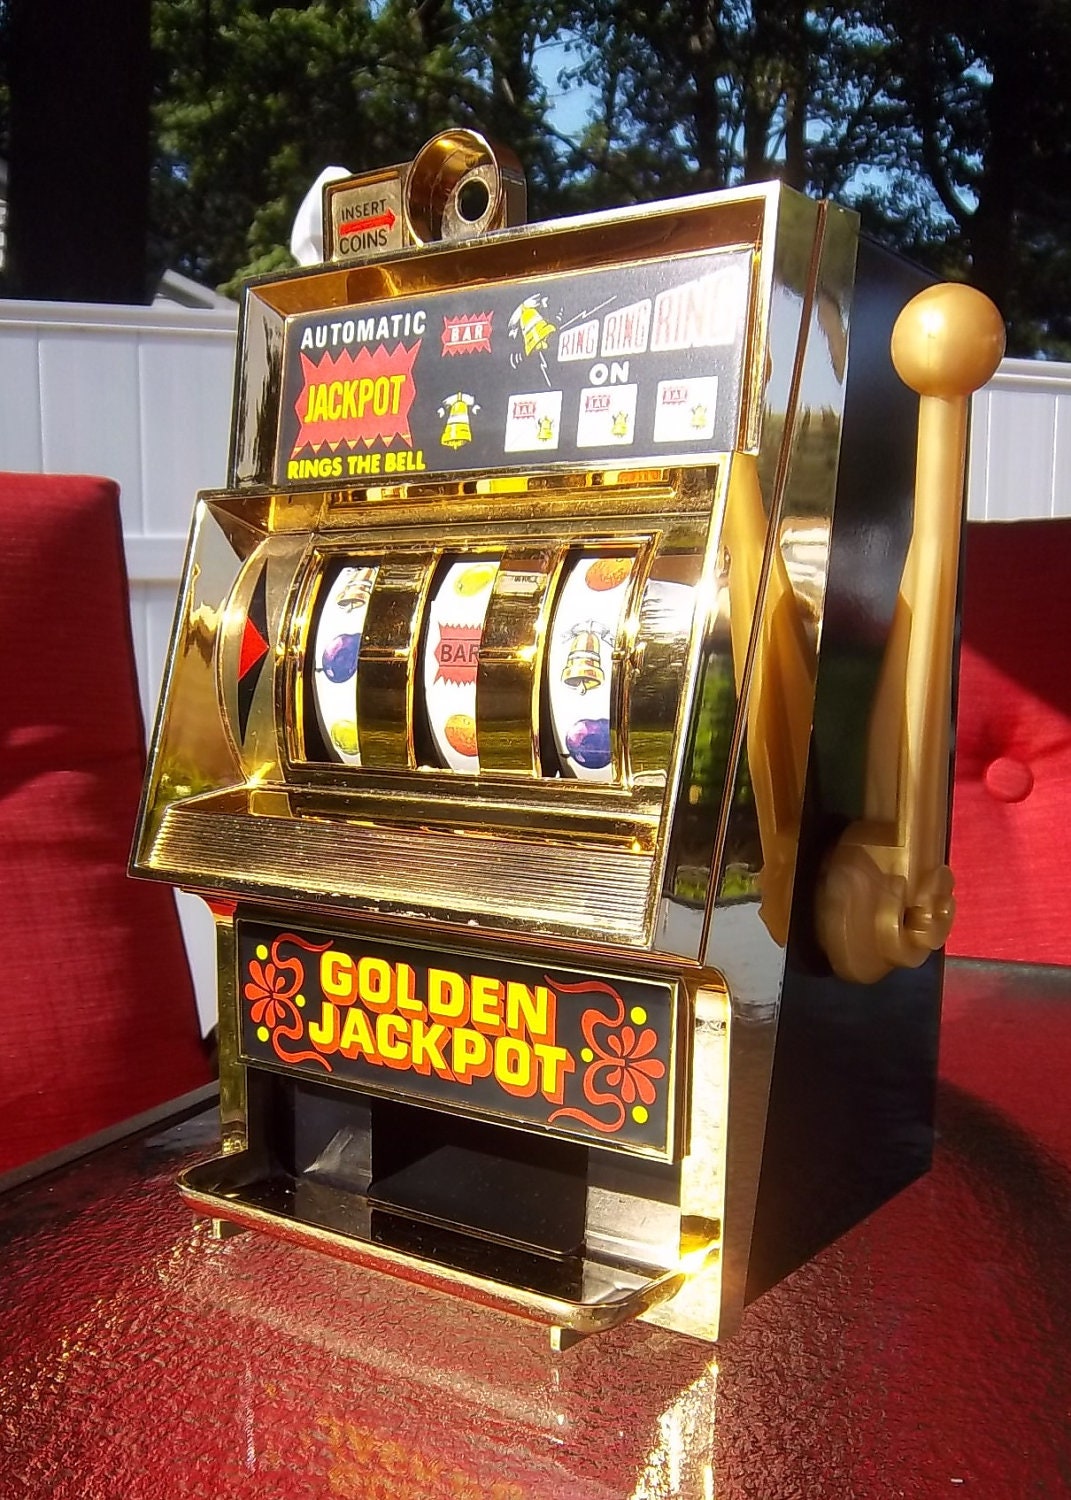 Agenzia entrate slot machine